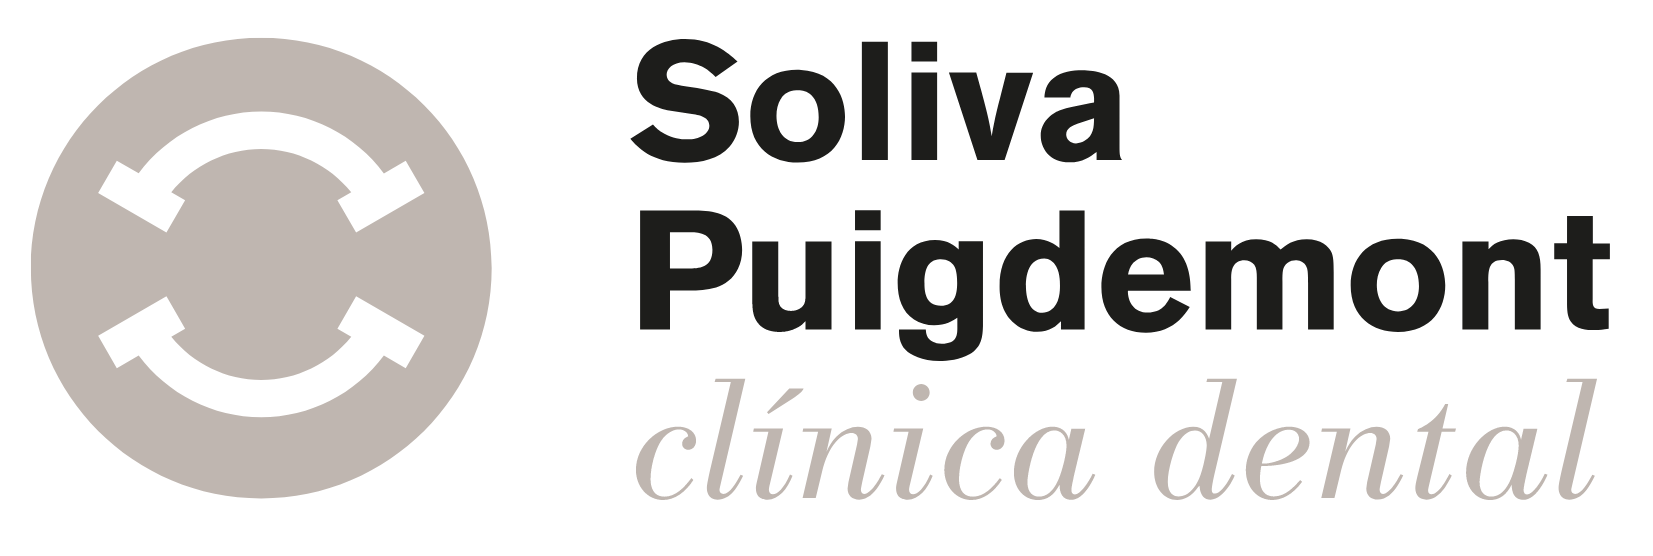 Soliva puigdemont logo